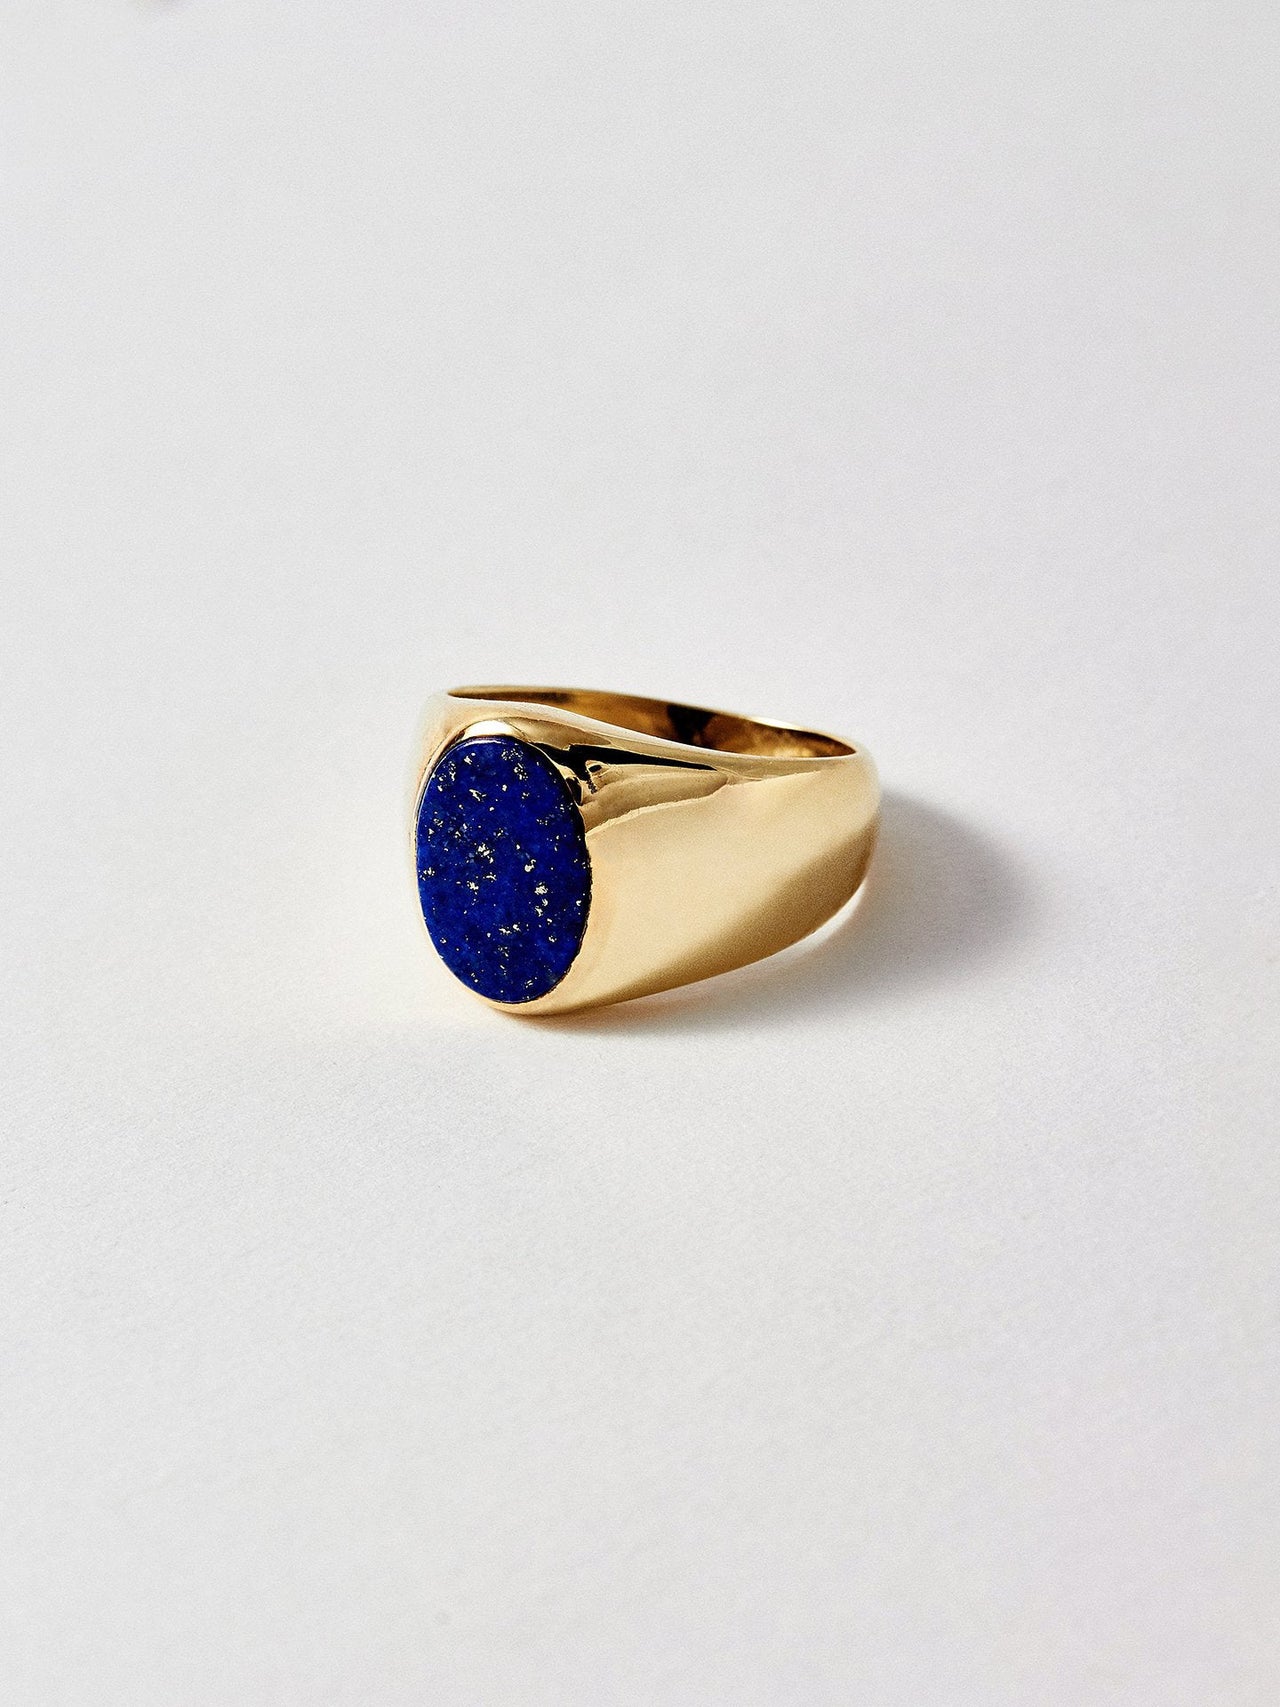 XL Lapis Signet Ring: Vermeil Signet Ring with a 8X11mm Lapis Lazuli Stone